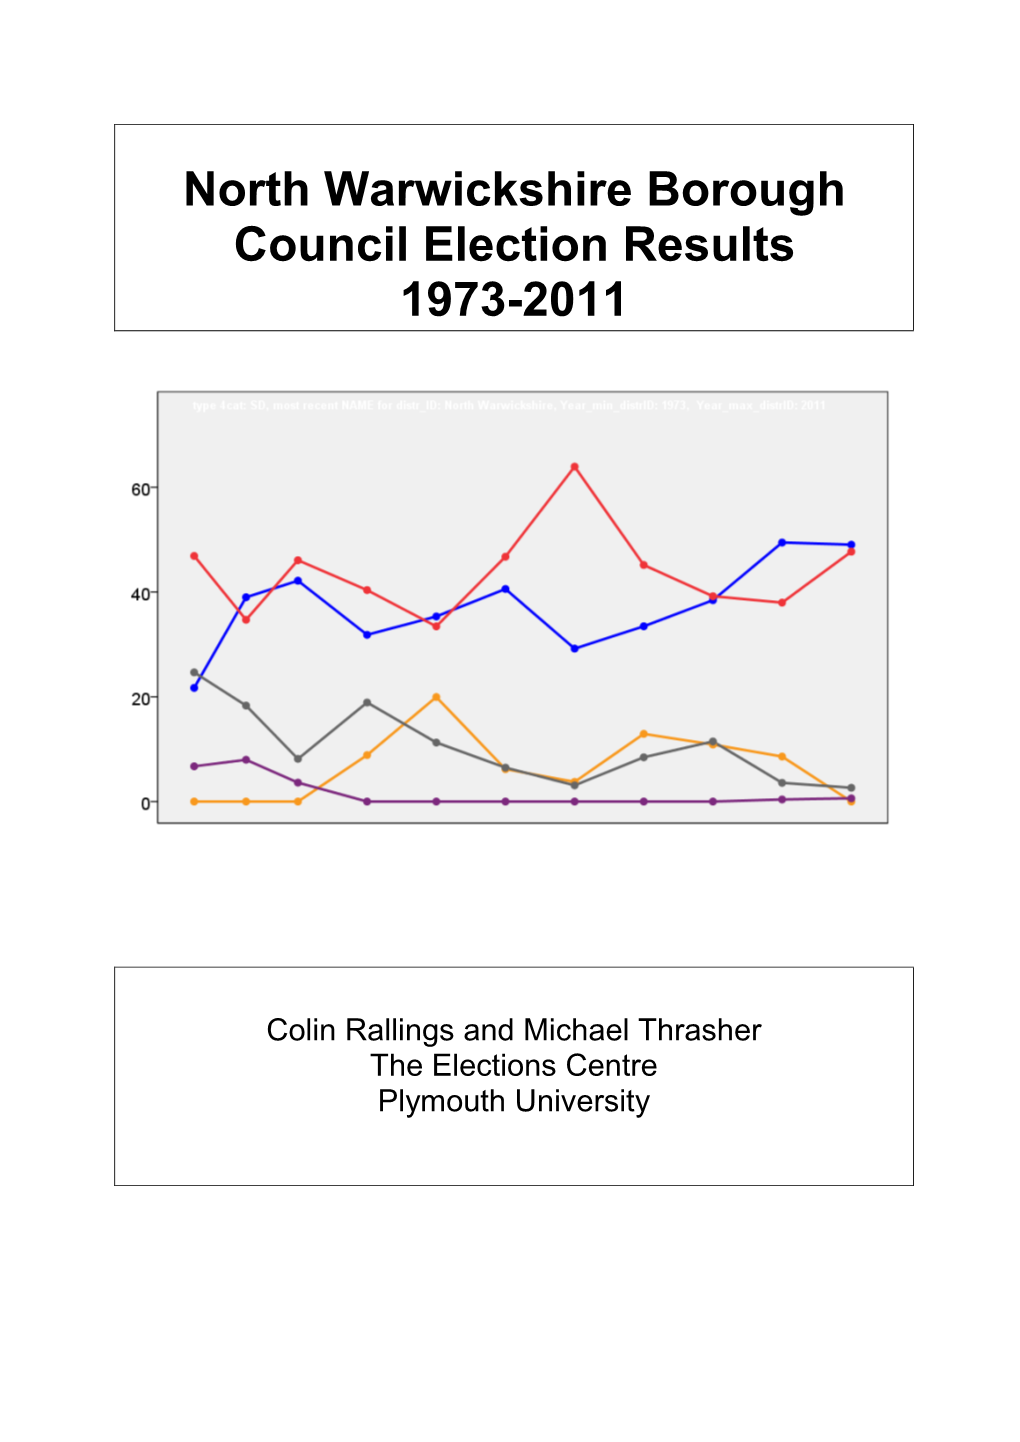 North Warwickshire Borough Council Election Results 1973-2011